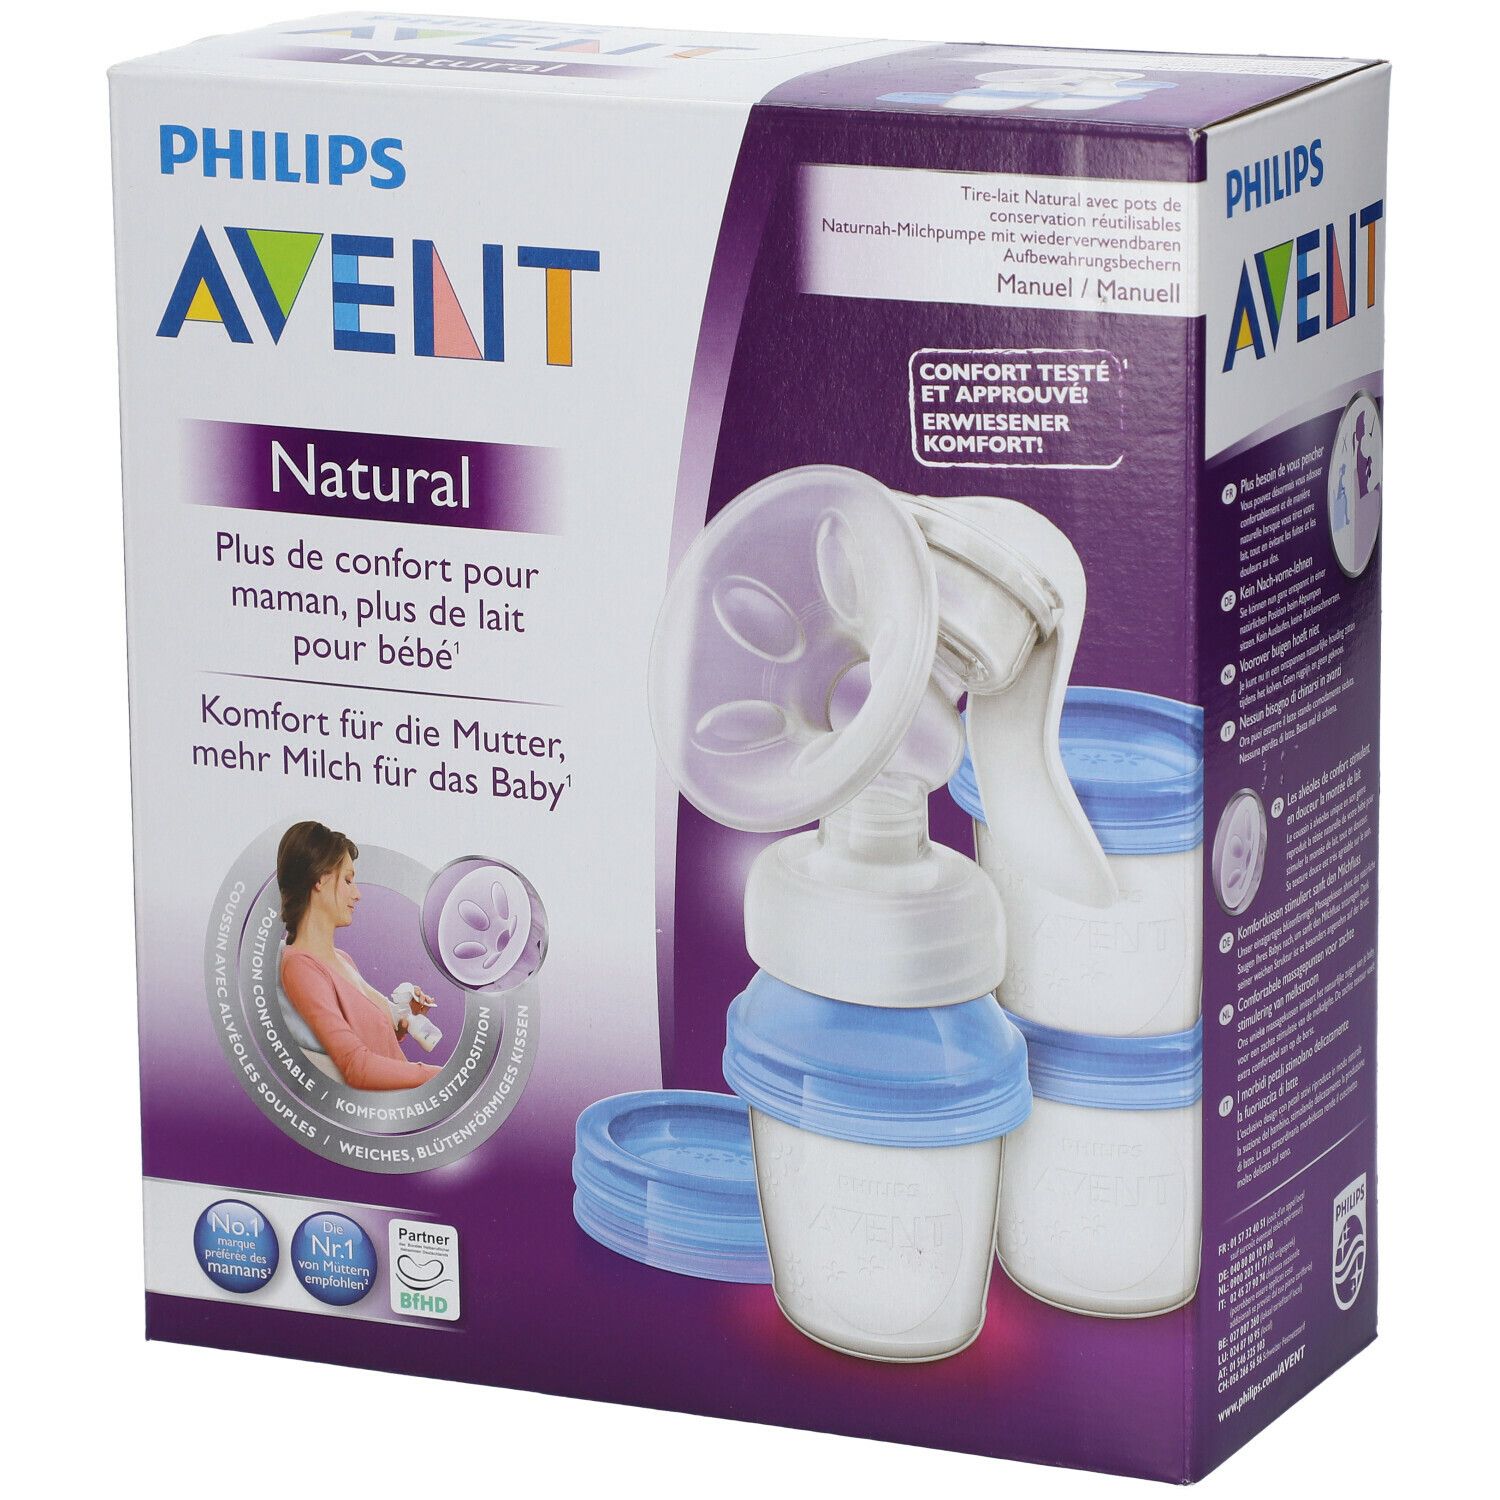 Tire lait manuel Philipps Avent - Philips AVENT